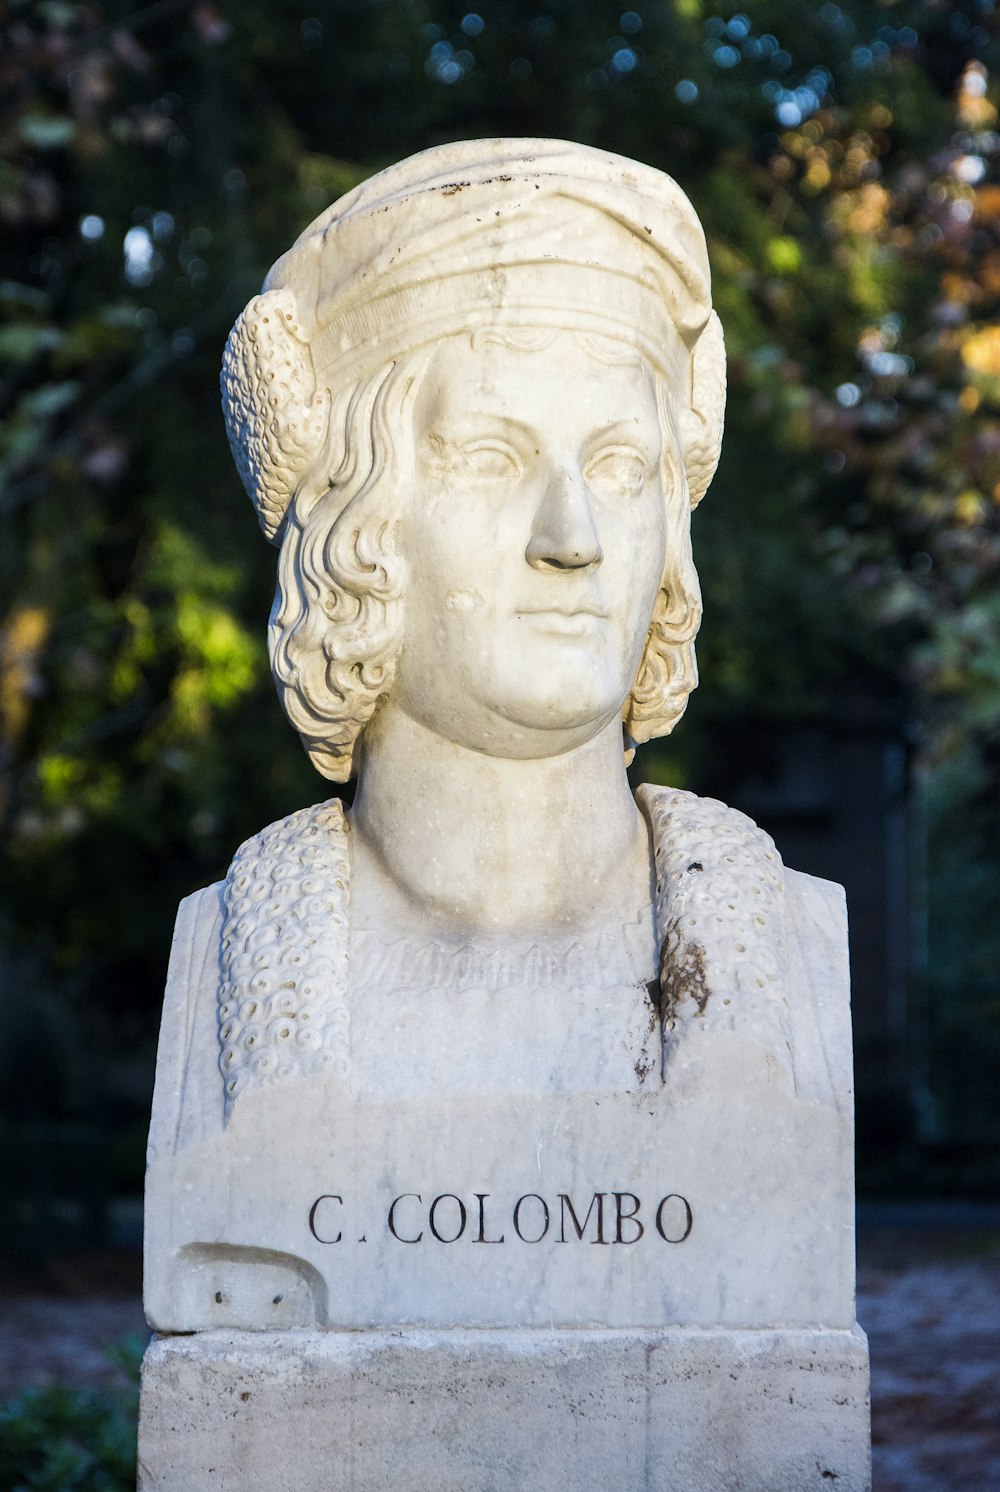 C. Colombo head bust